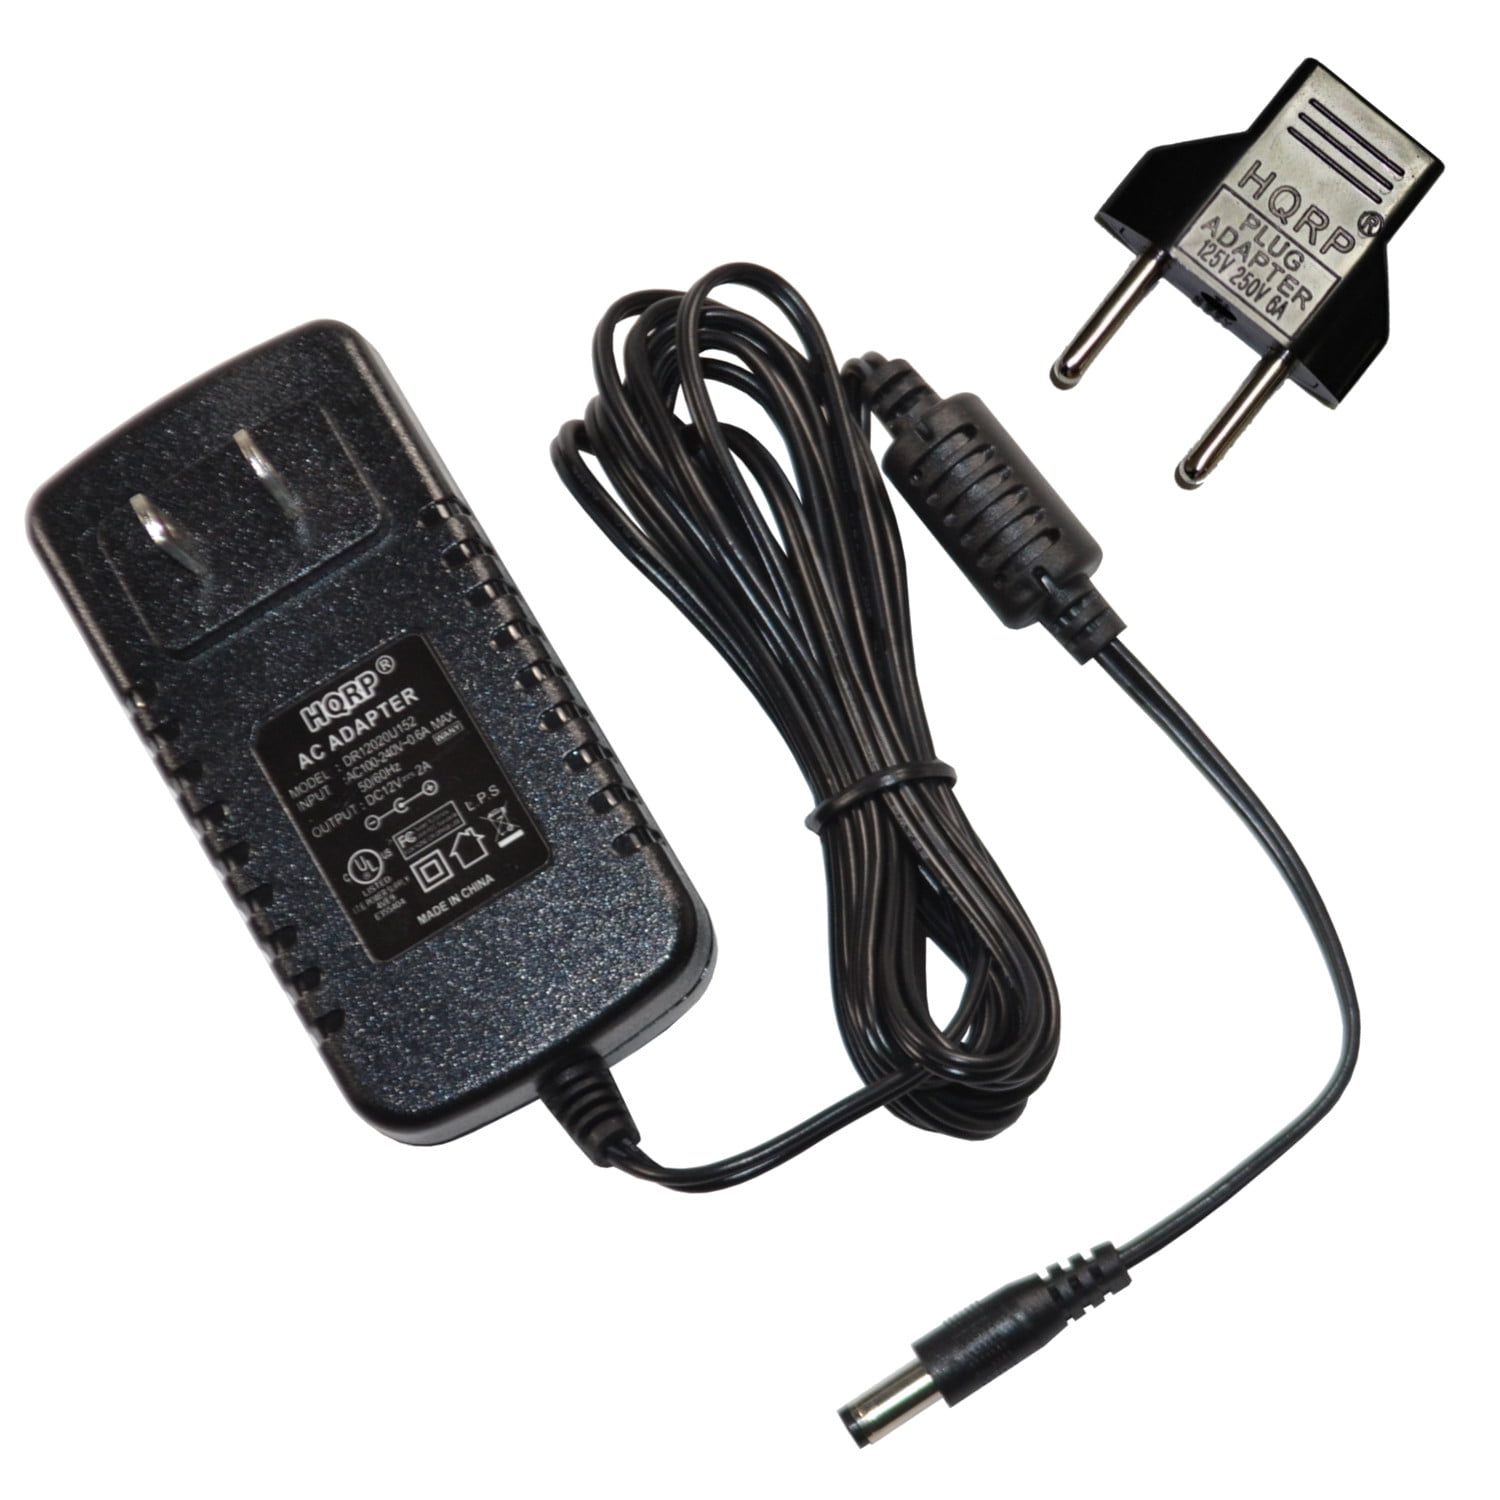 MyVolts 12V power supply adaptor compatible with Yamaha PSR-280 Keyboard UK plug